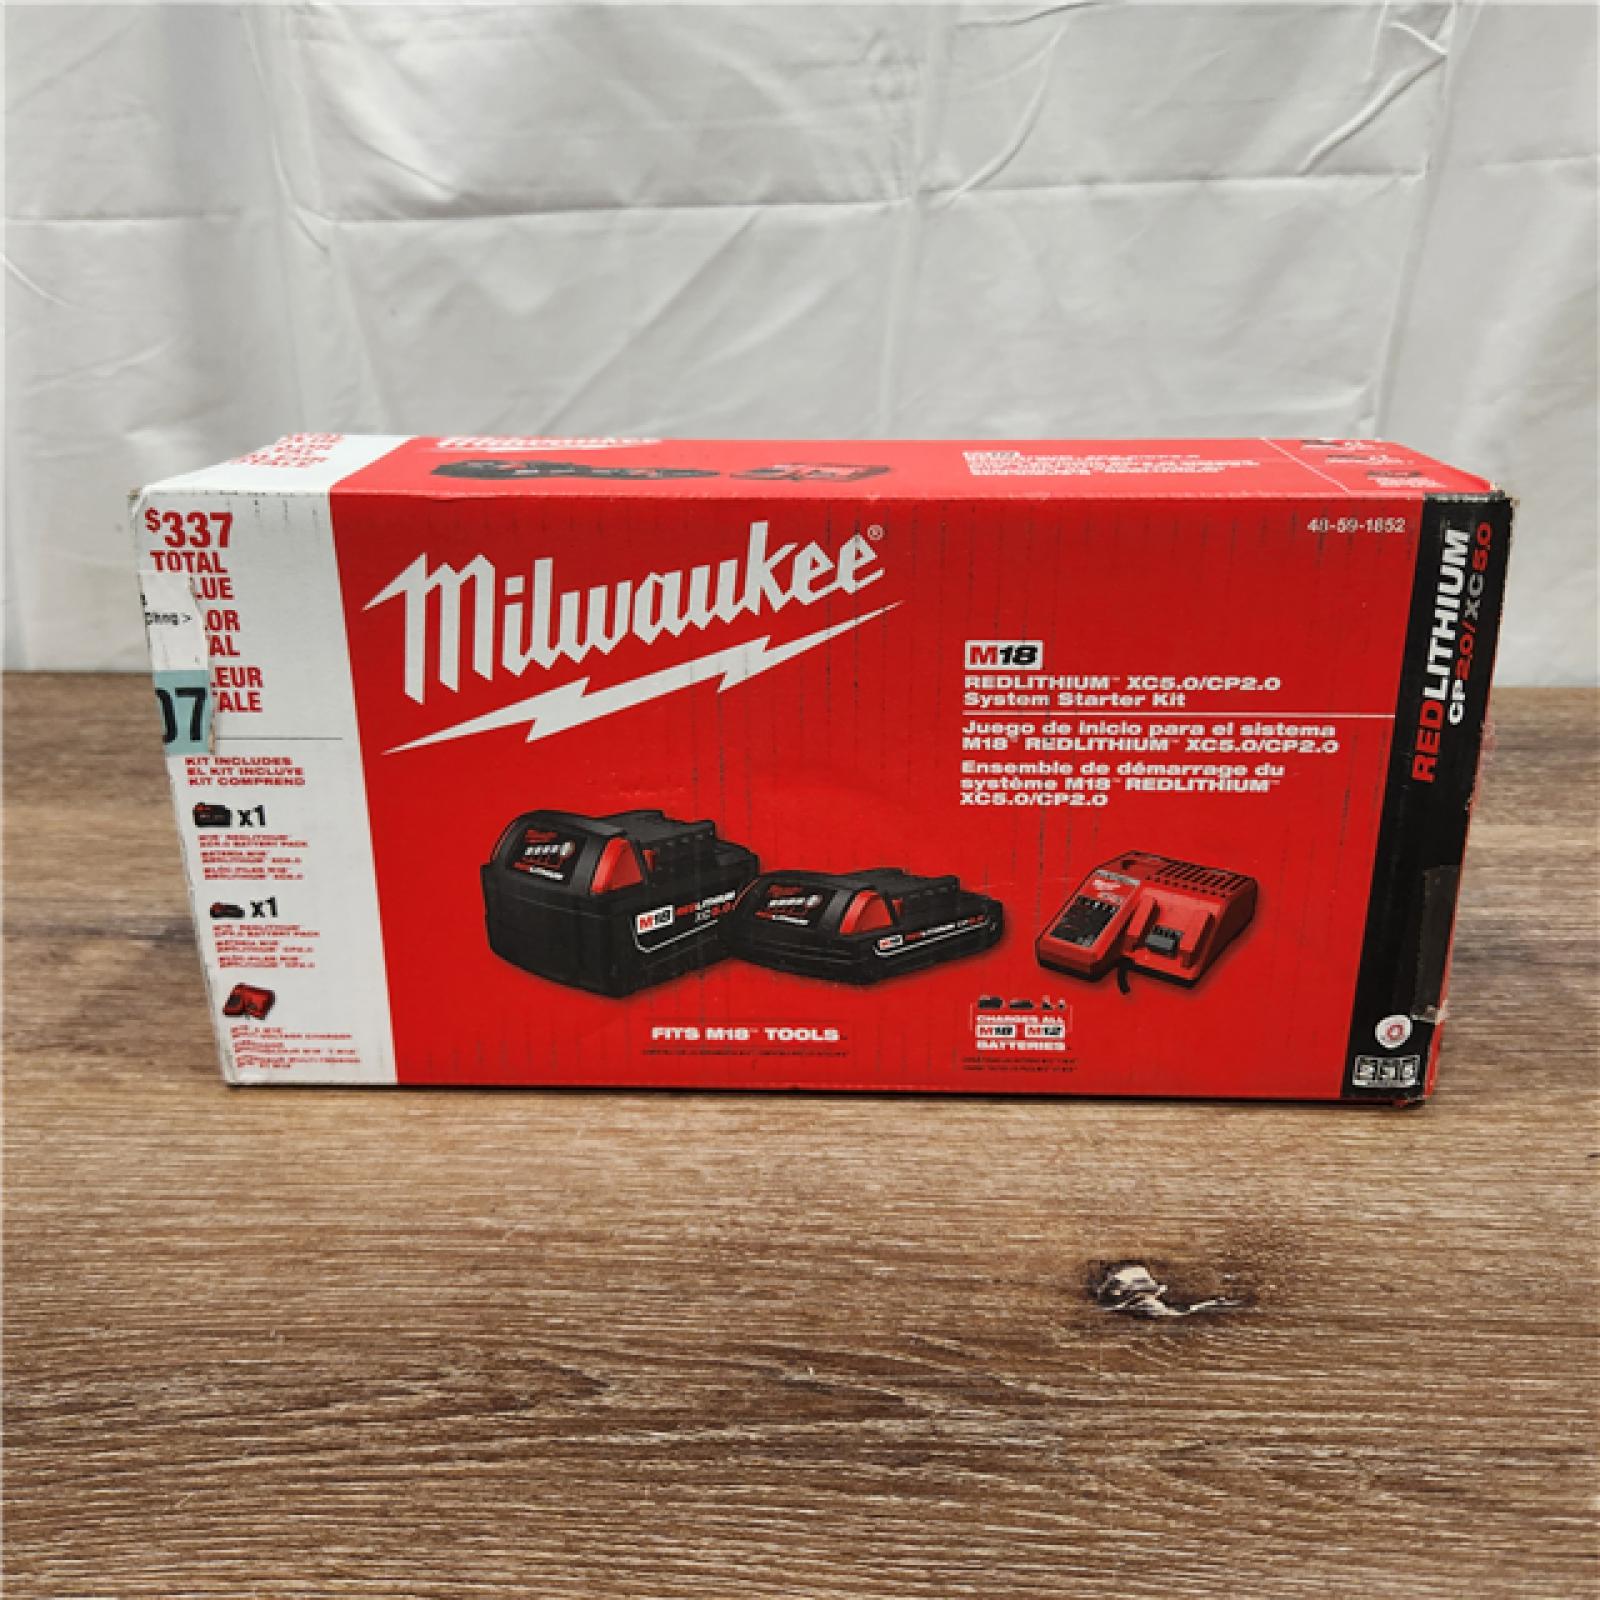 AS-IS Milwaukee M18 Redlithium Xc5.0 Resistant Battery Starter Kit